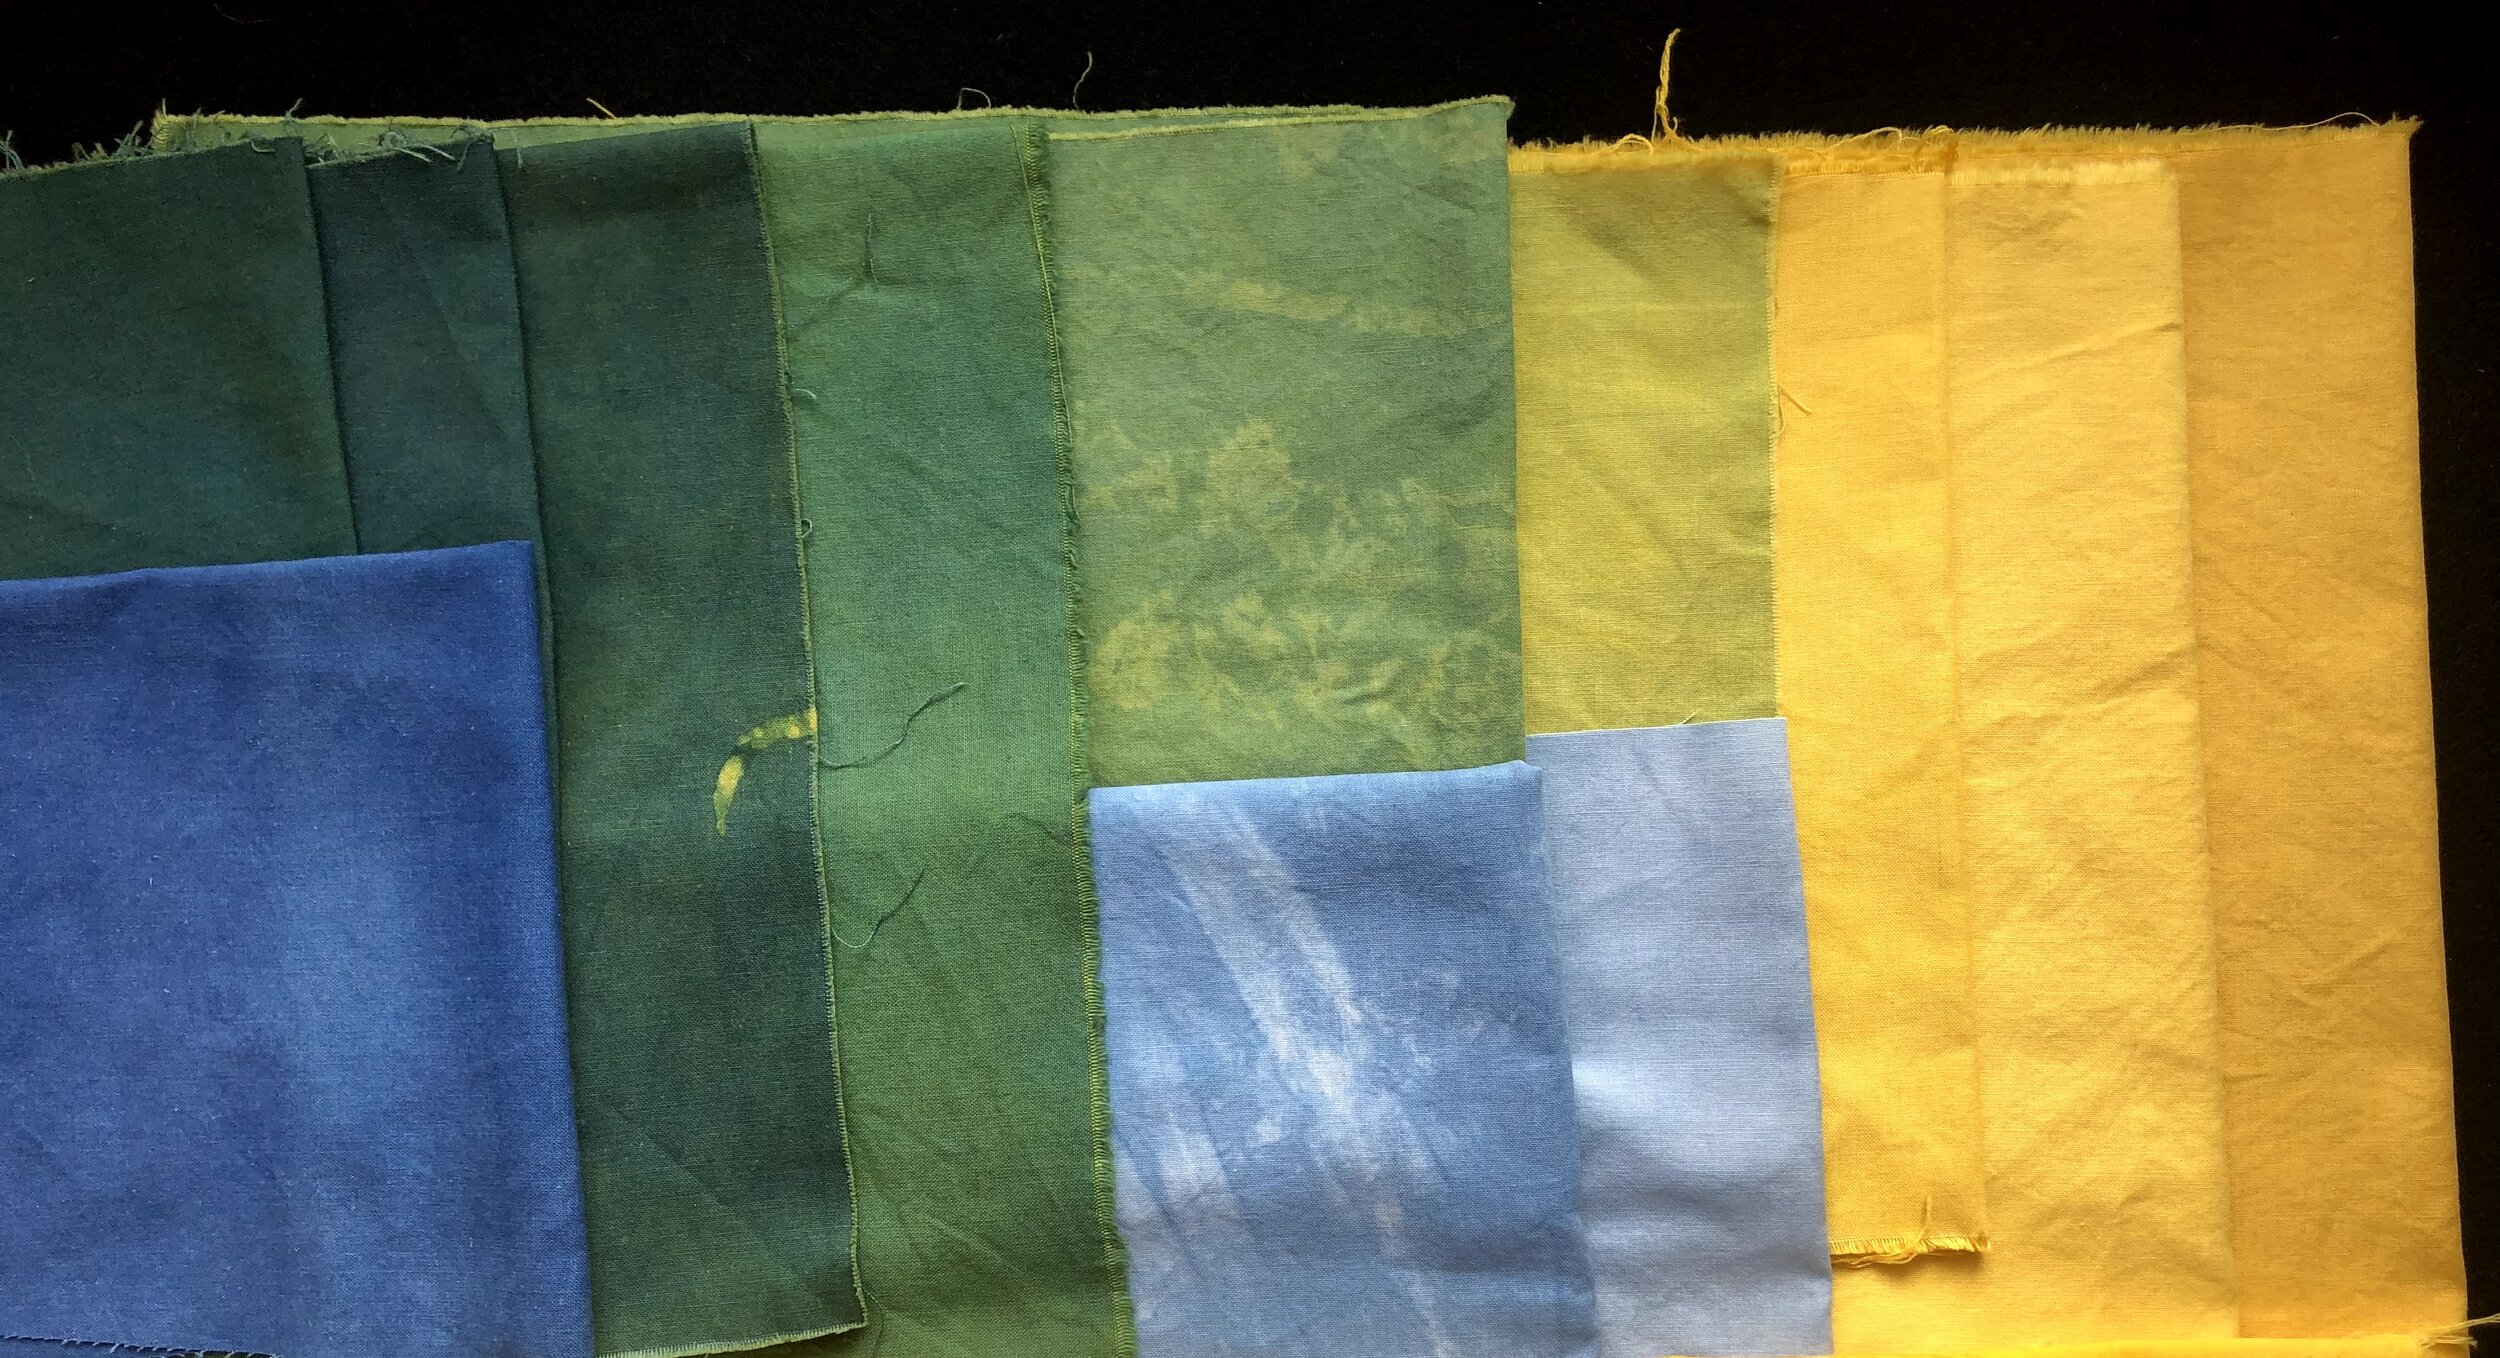 Blue Hand-dyed Indigo Fabric Overdyed with Yellow Turmeric Creates